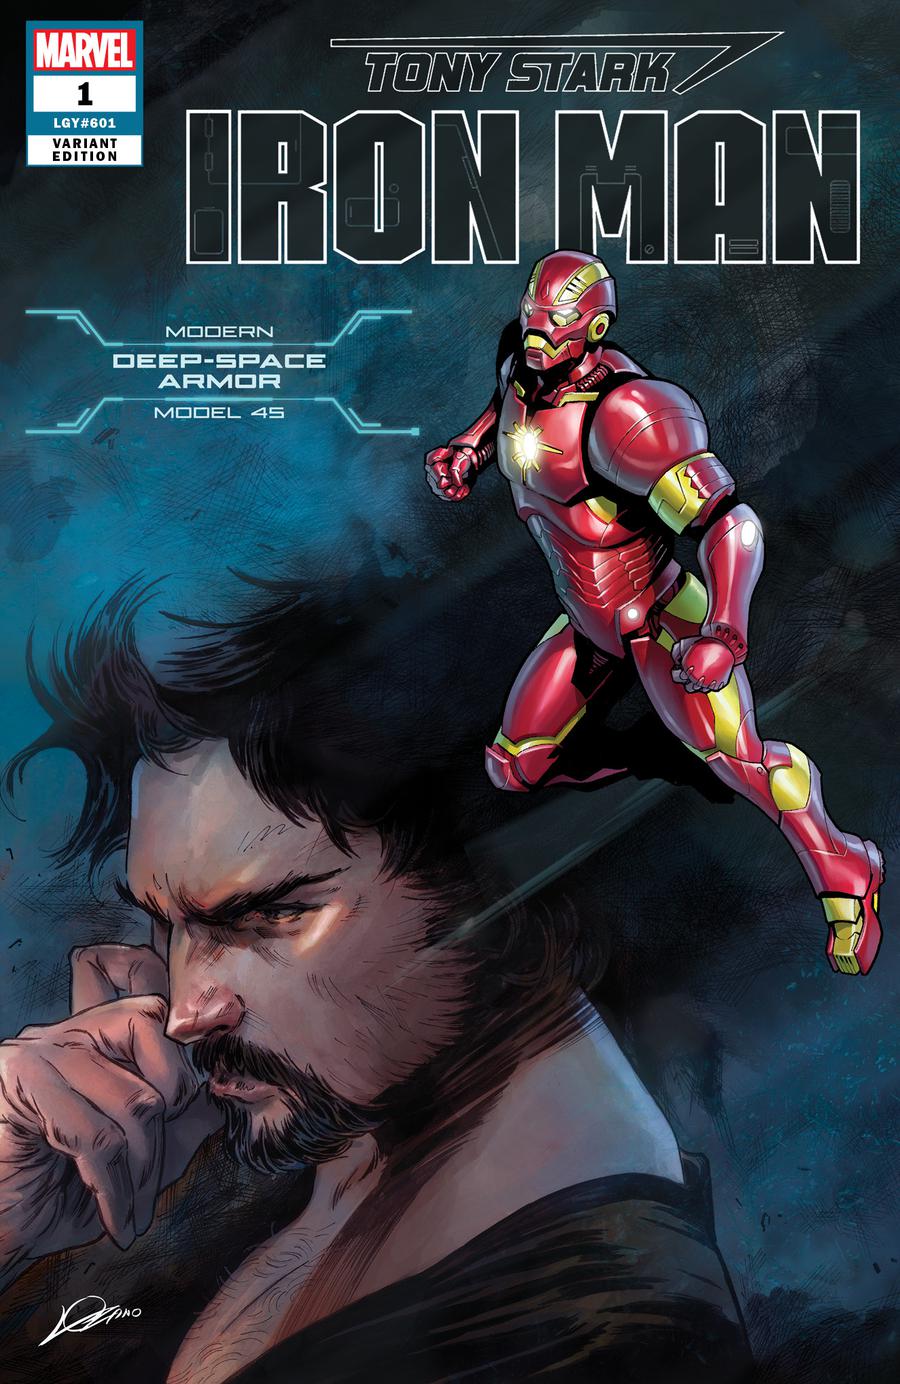 Tony Stark Iron Man #1 Model 45 Modern Deep Space Armor Edition (Lozano) [2018]